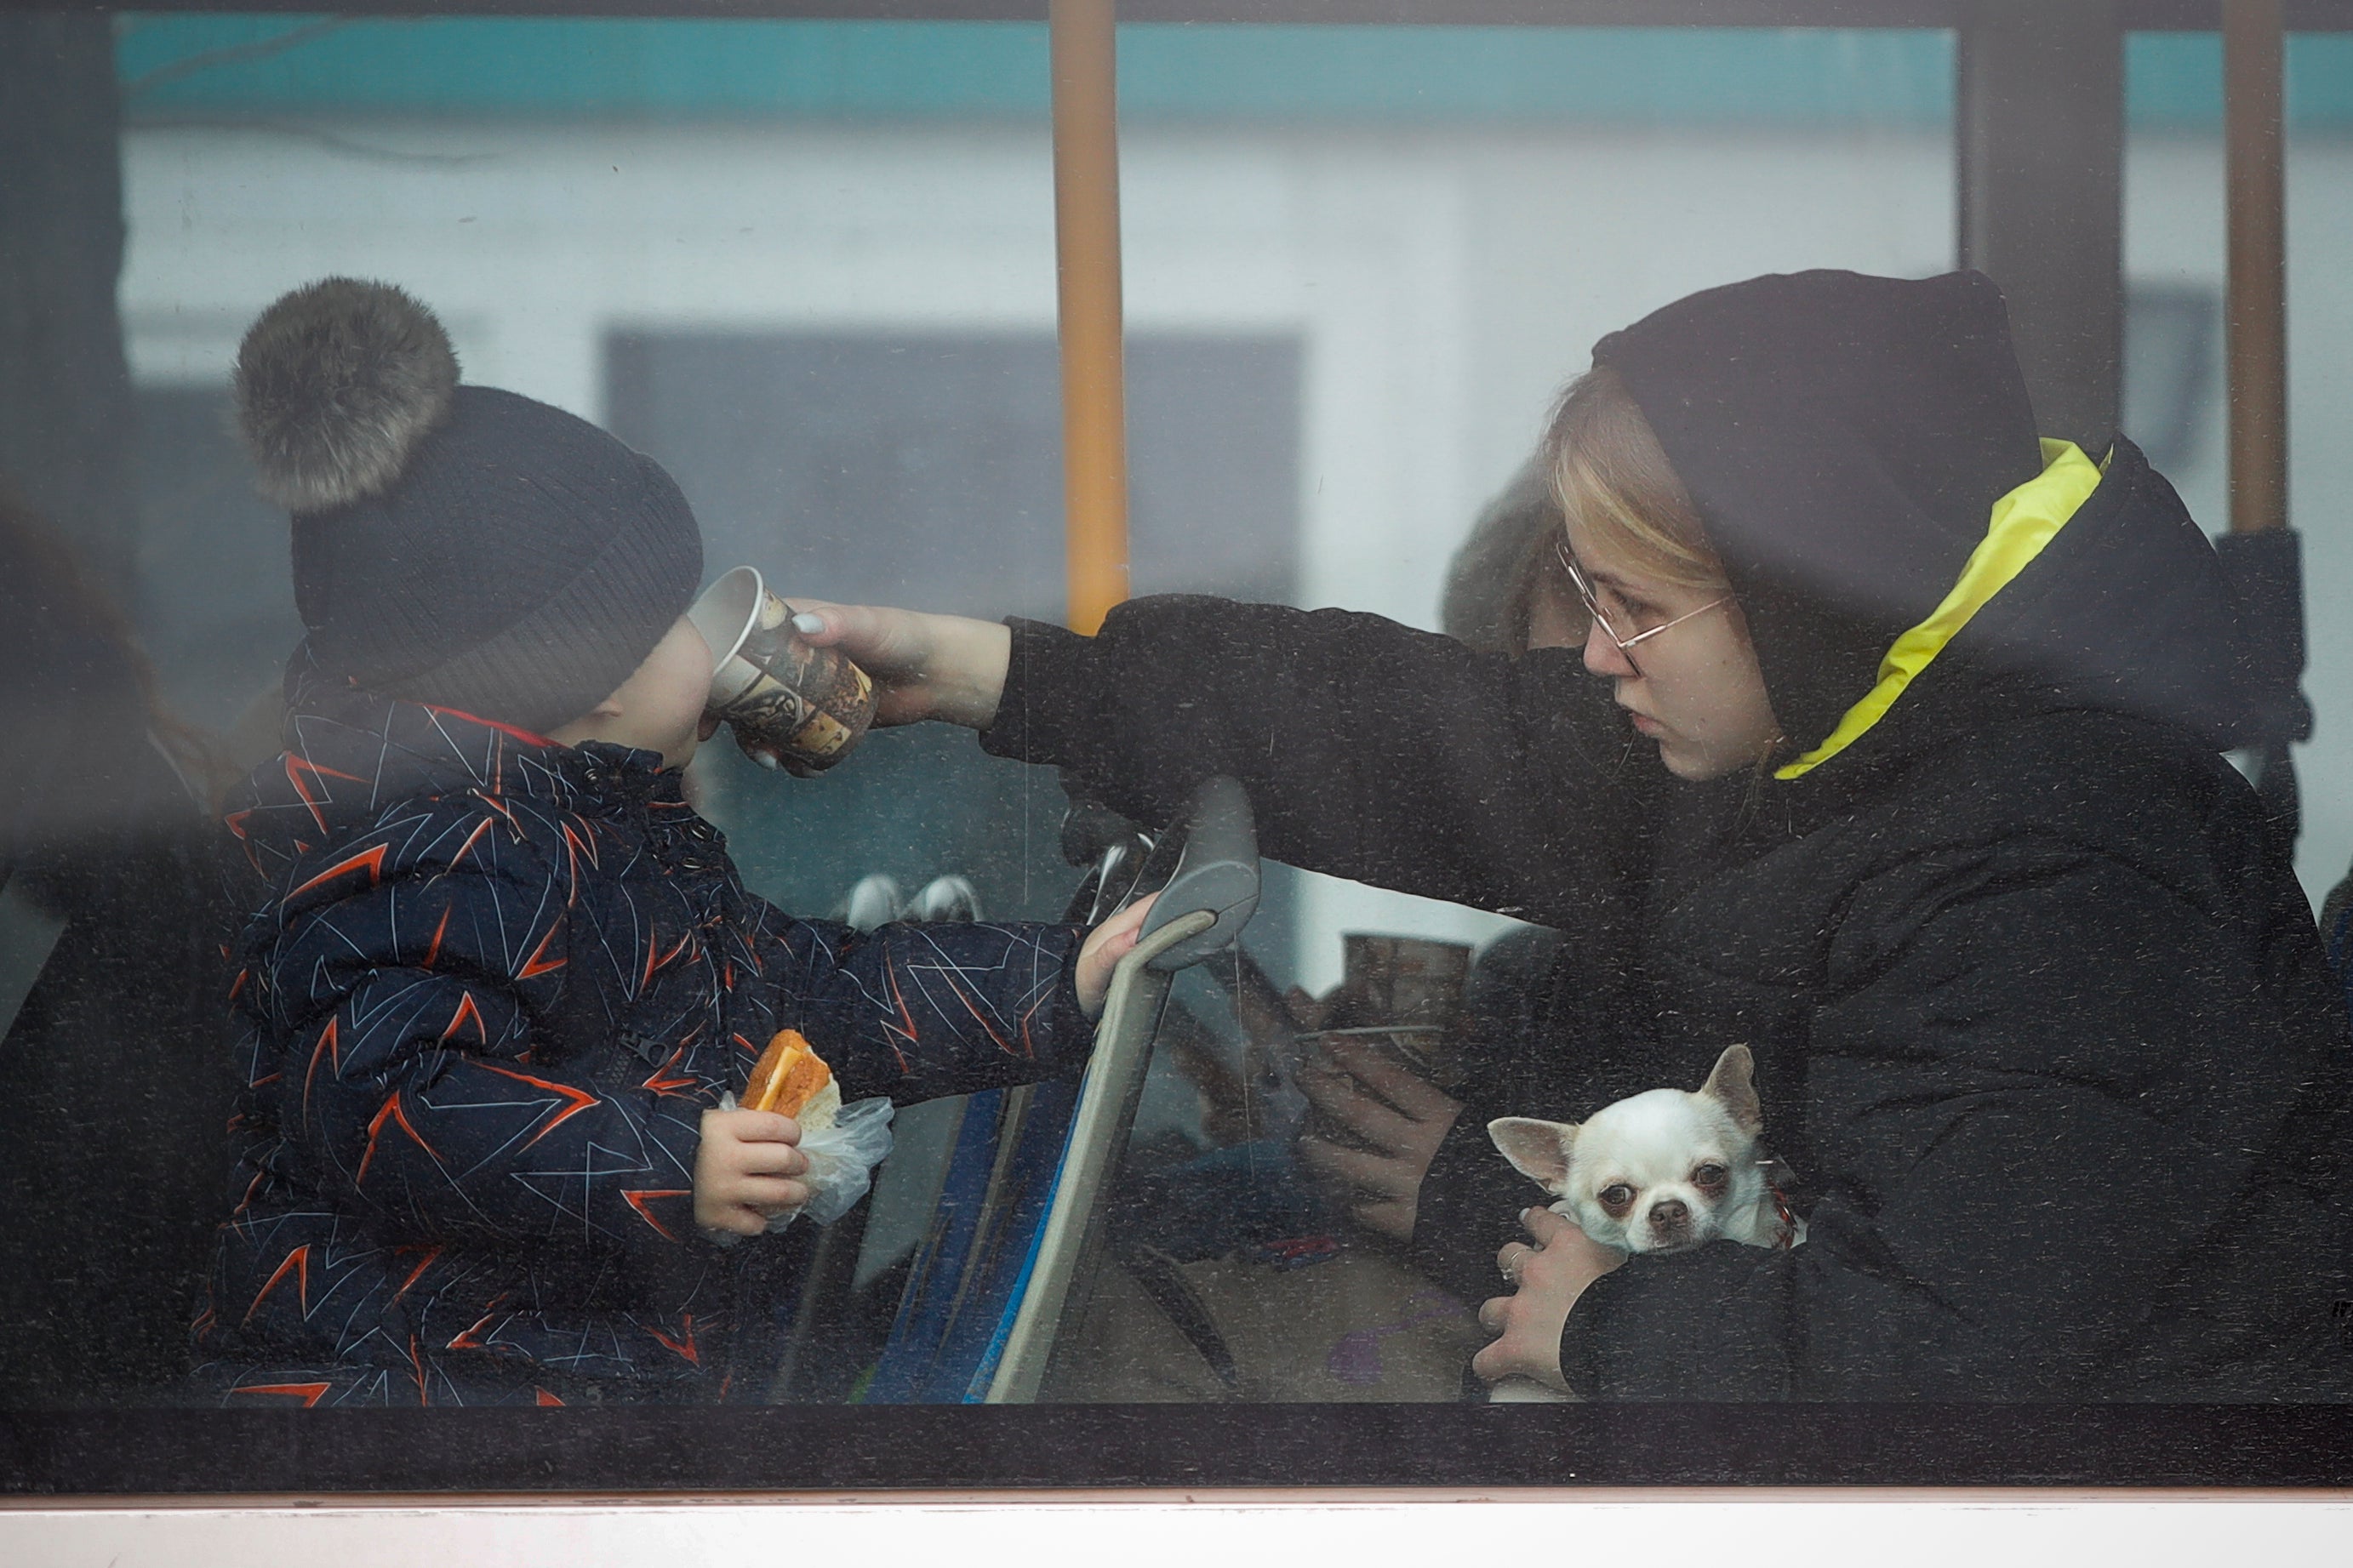 Un refugiado con un perrito en brazos da un sorbo de té a un niño pequeño tras huir de Ucrania